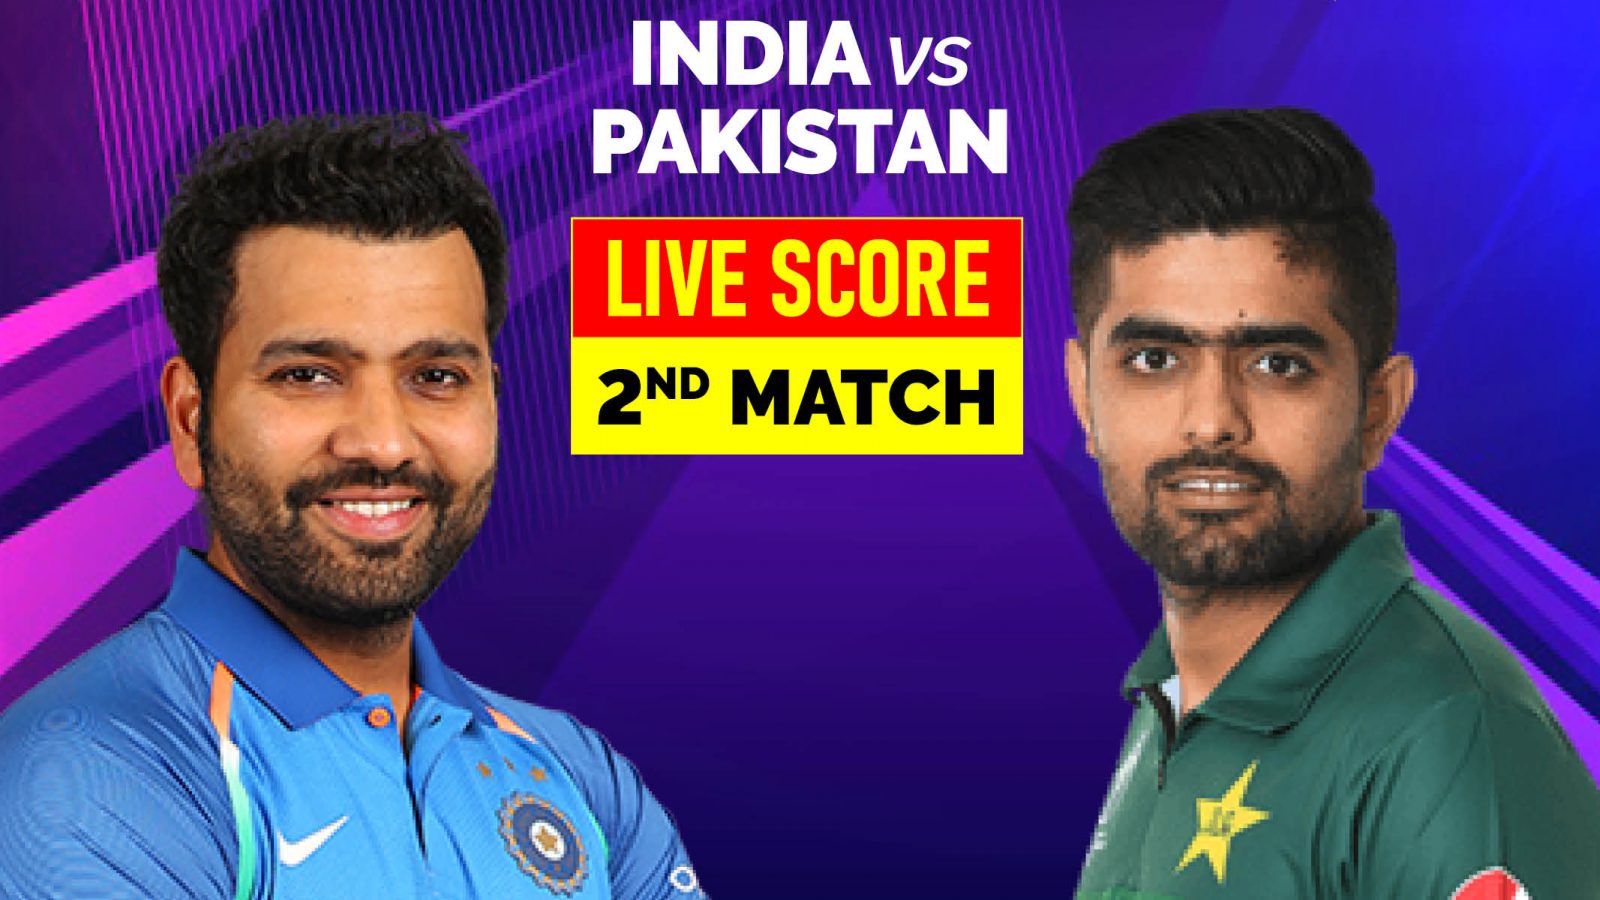 pak and india match live